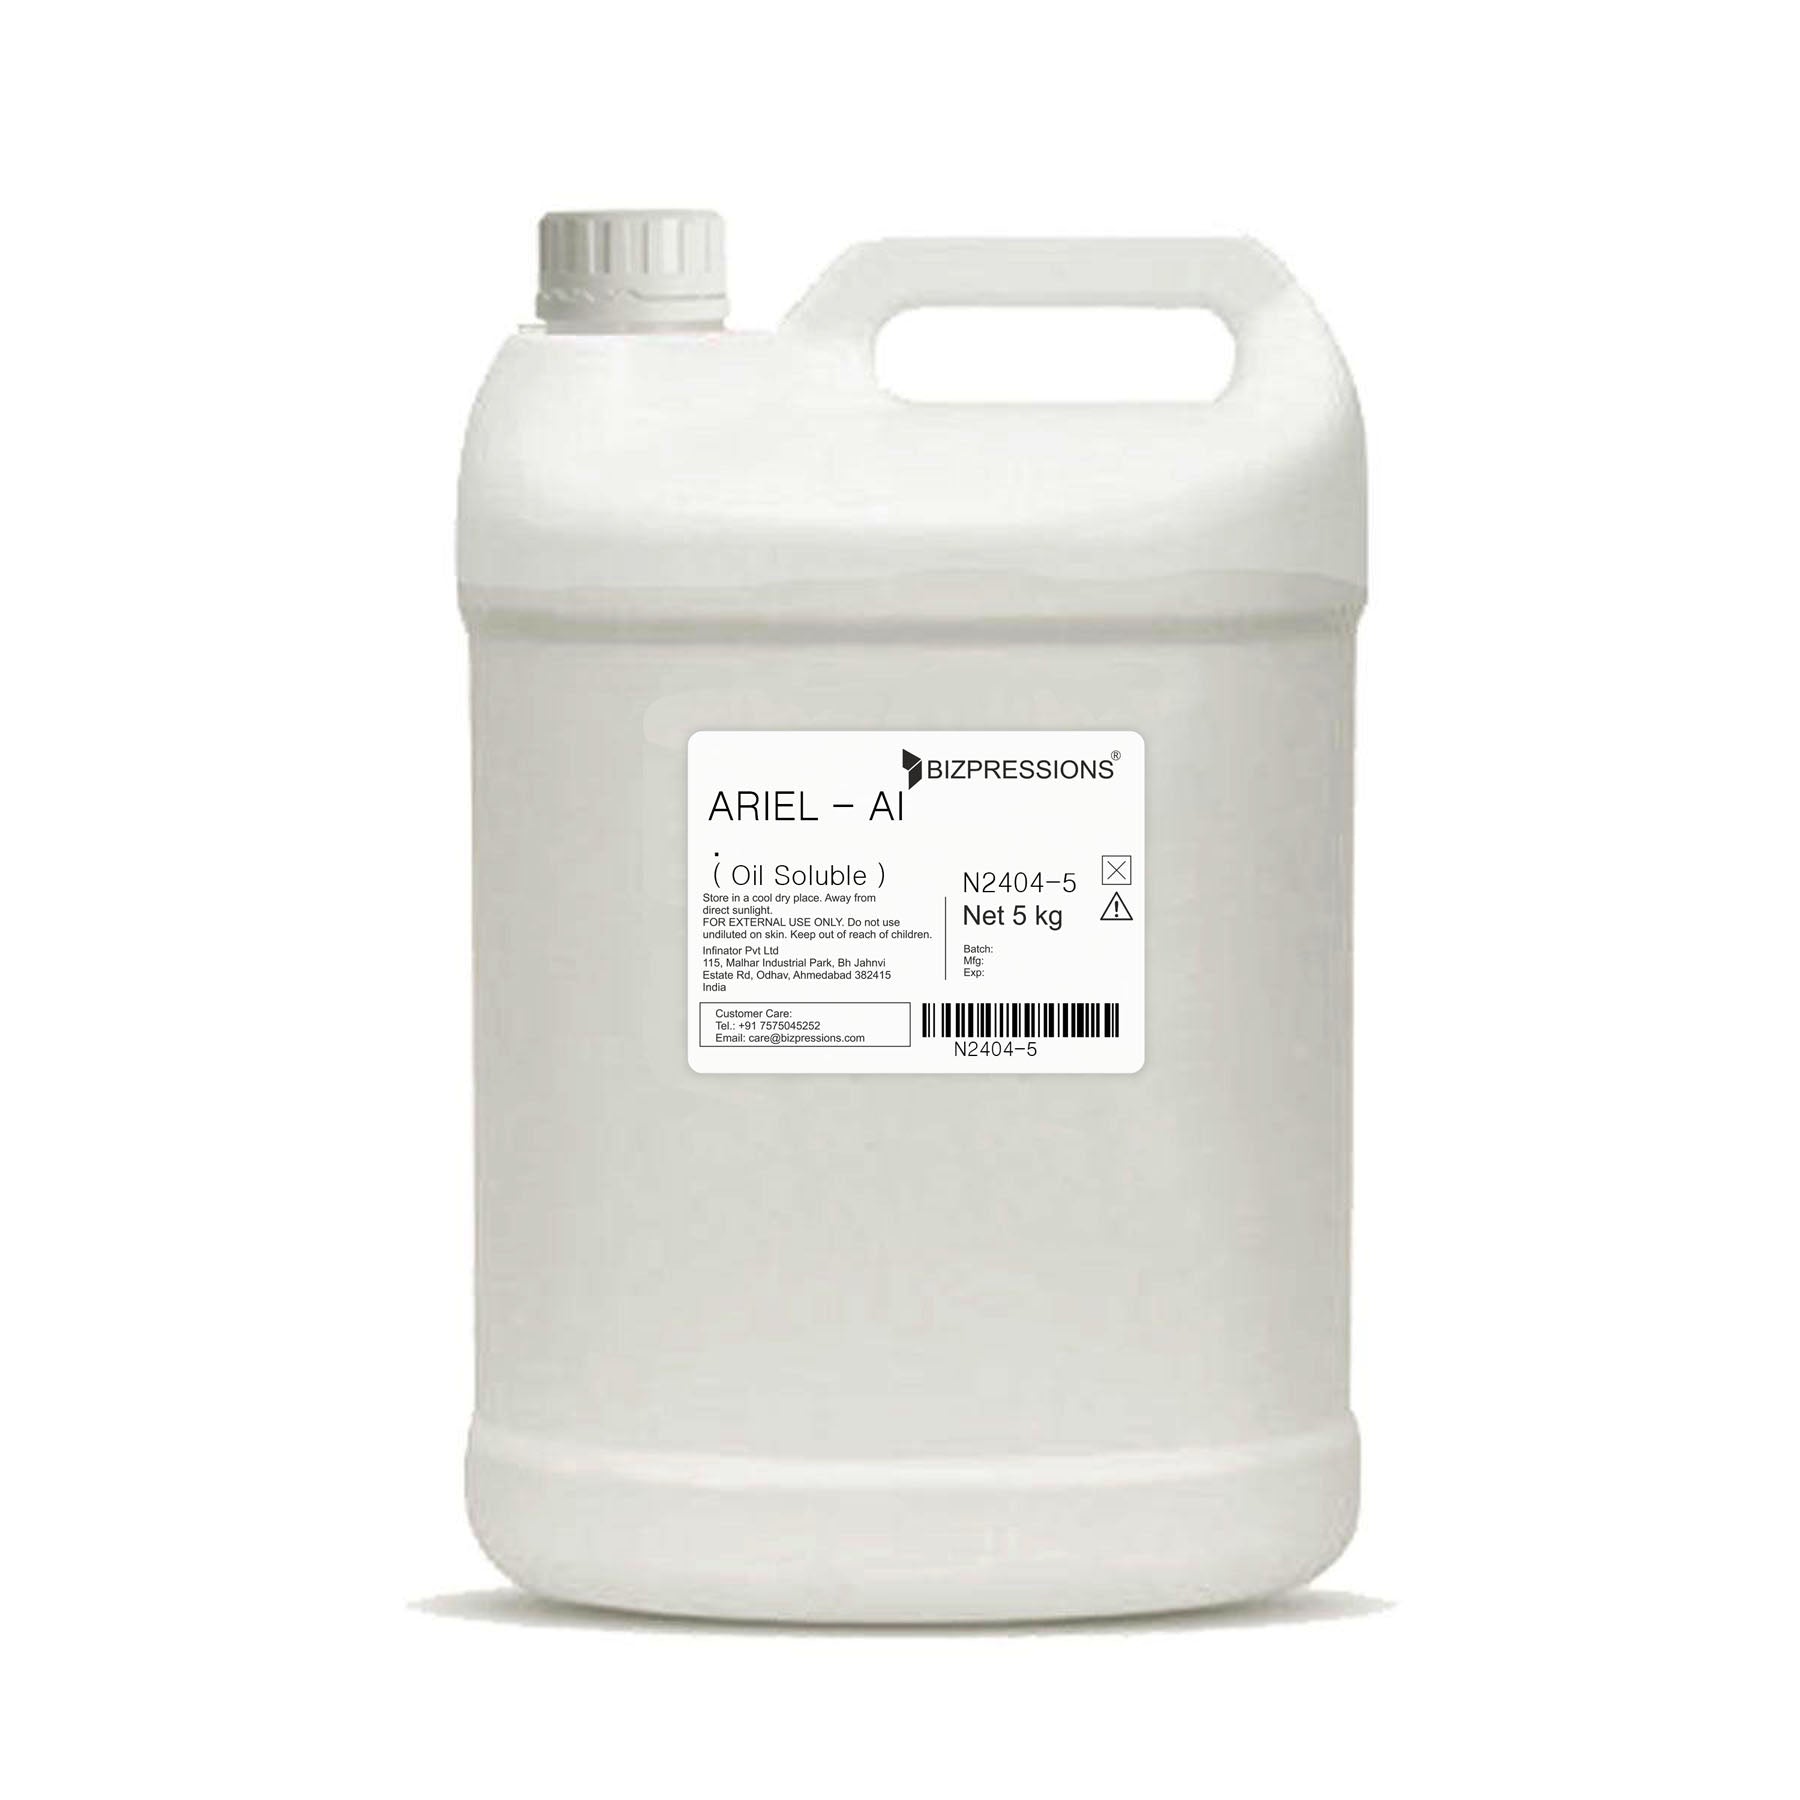 ARIEL - AI - Fragrance ( Oil Soluble ) - 5 kg